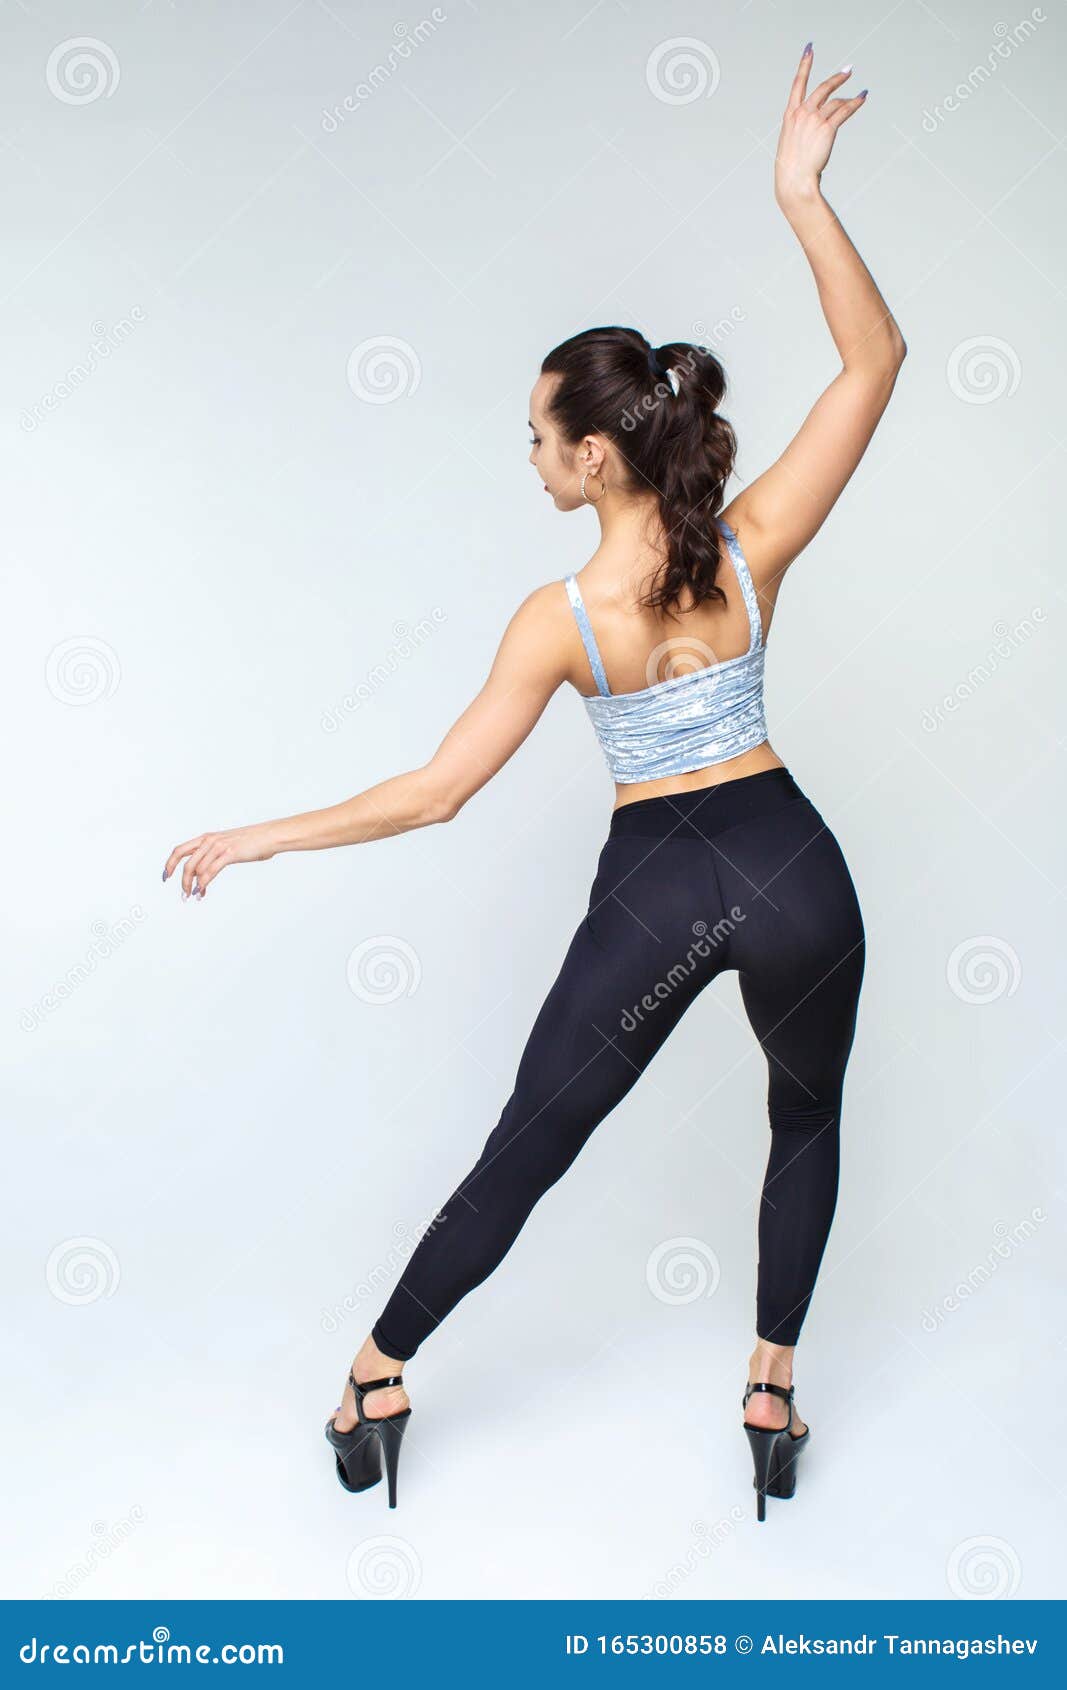 Pantyhose High Heels Crouching Fashion Model Stock Photos 